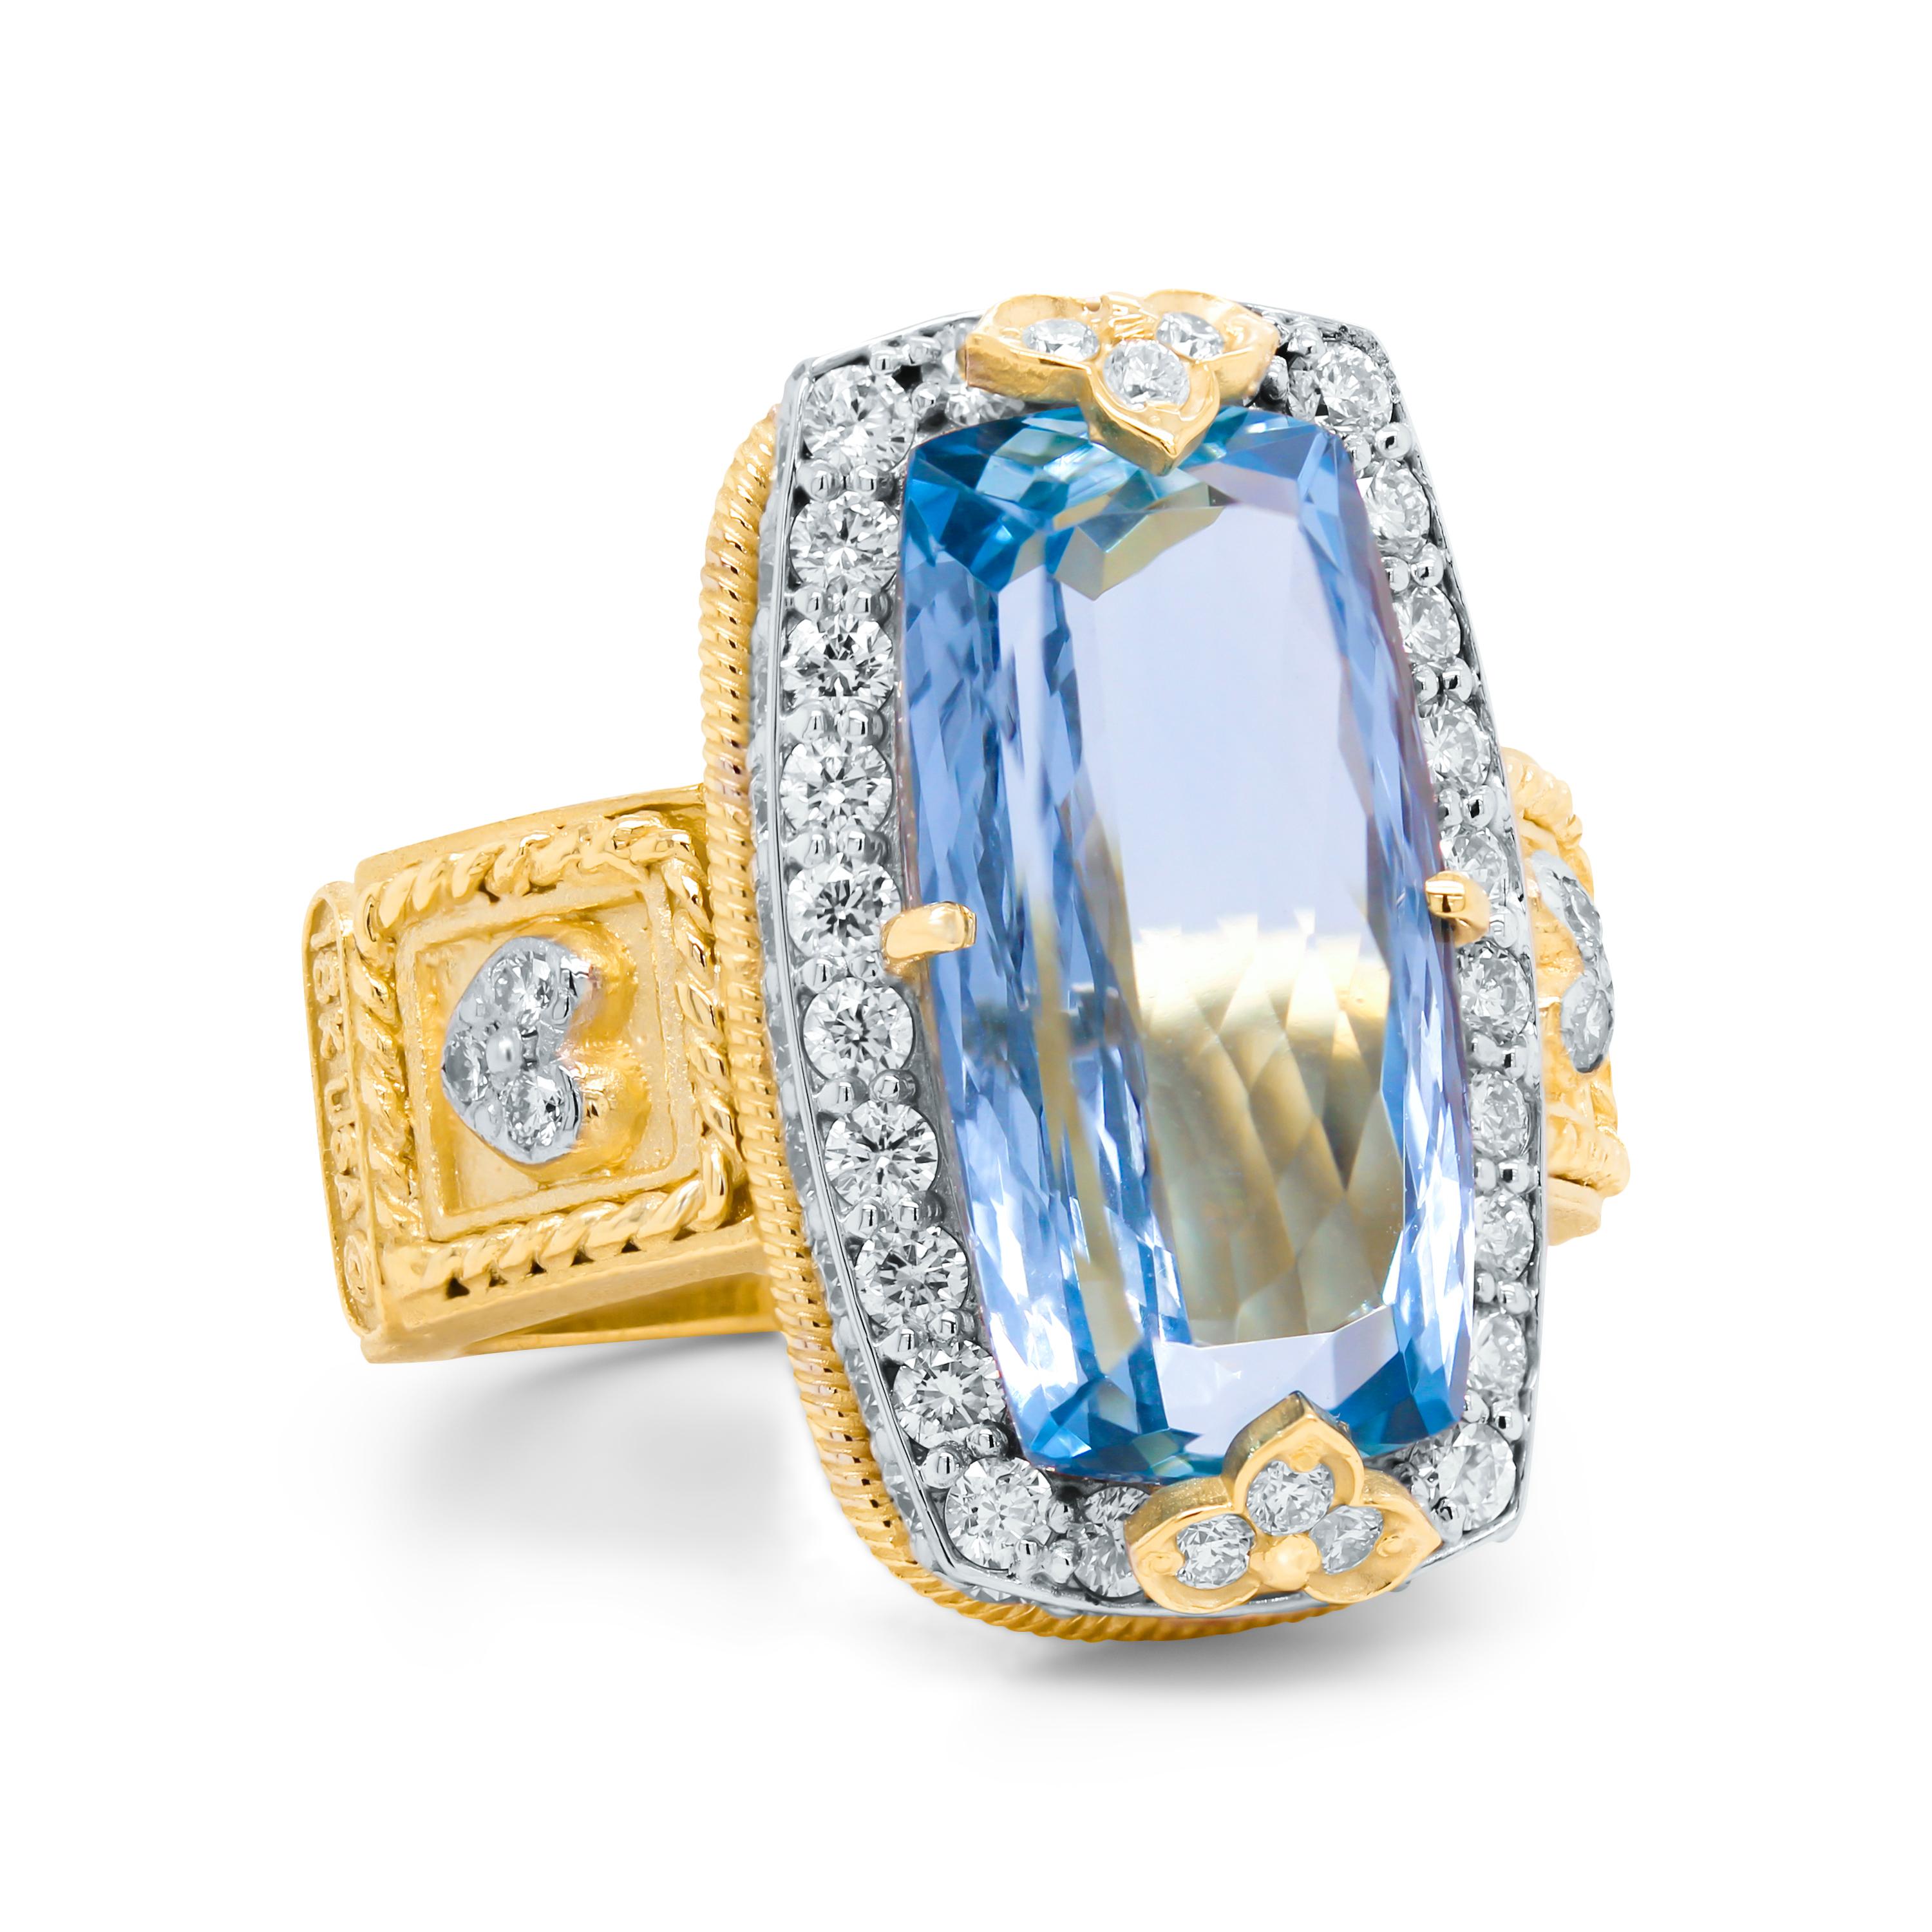 Stambolian 18K Gold Diamond 8.42 Carat Emerald Cut Aquamarine Center Ring In New Condition For Sale In Boca Raton, FL